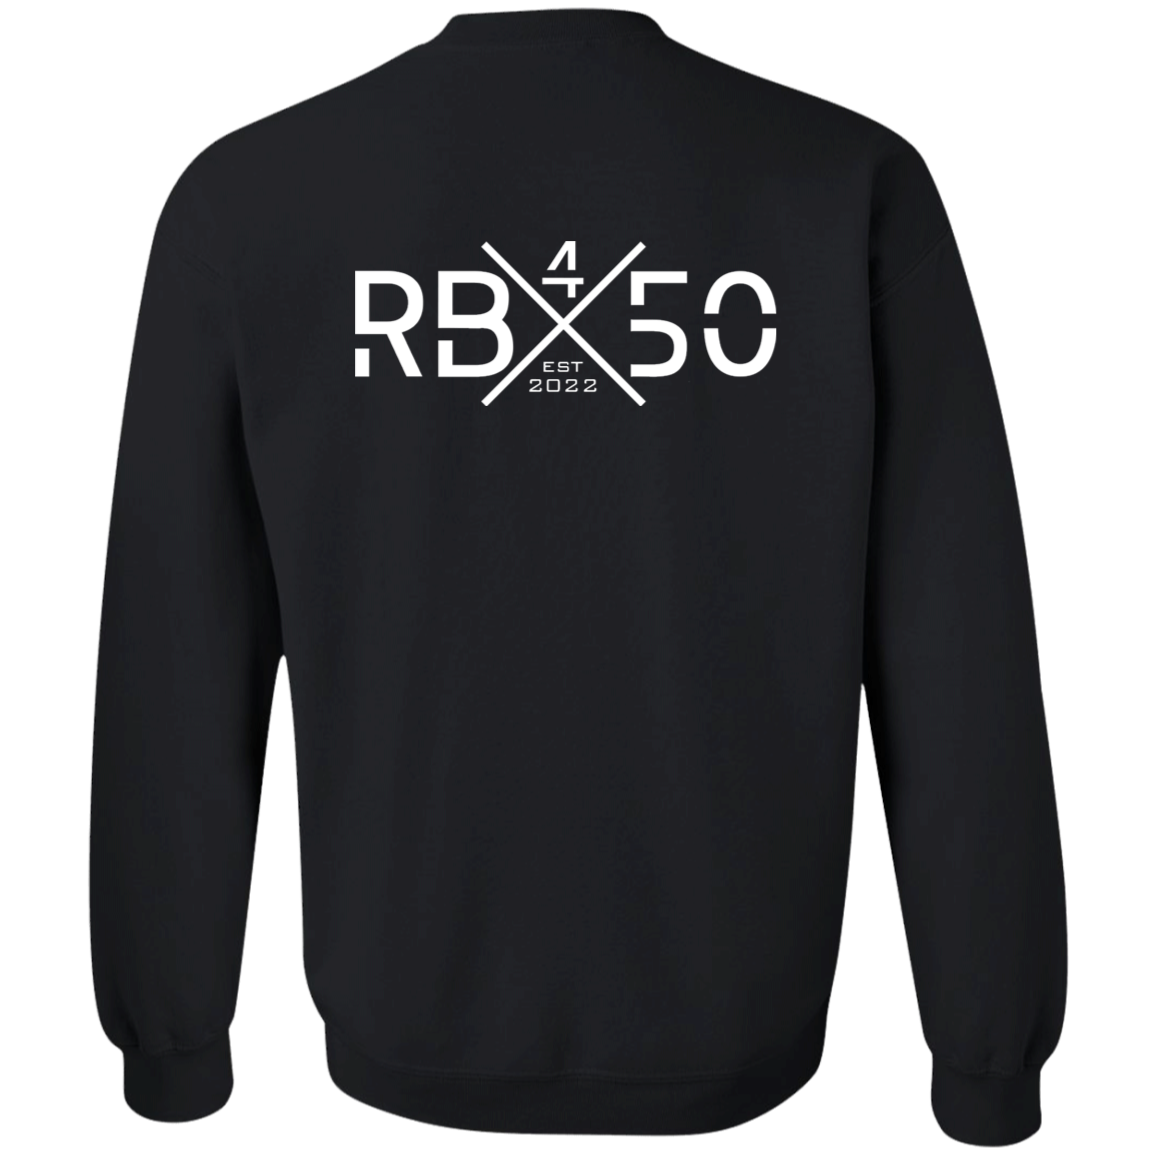 RB450 REAP Pullover Crewneck Sweatshirt 8 oz